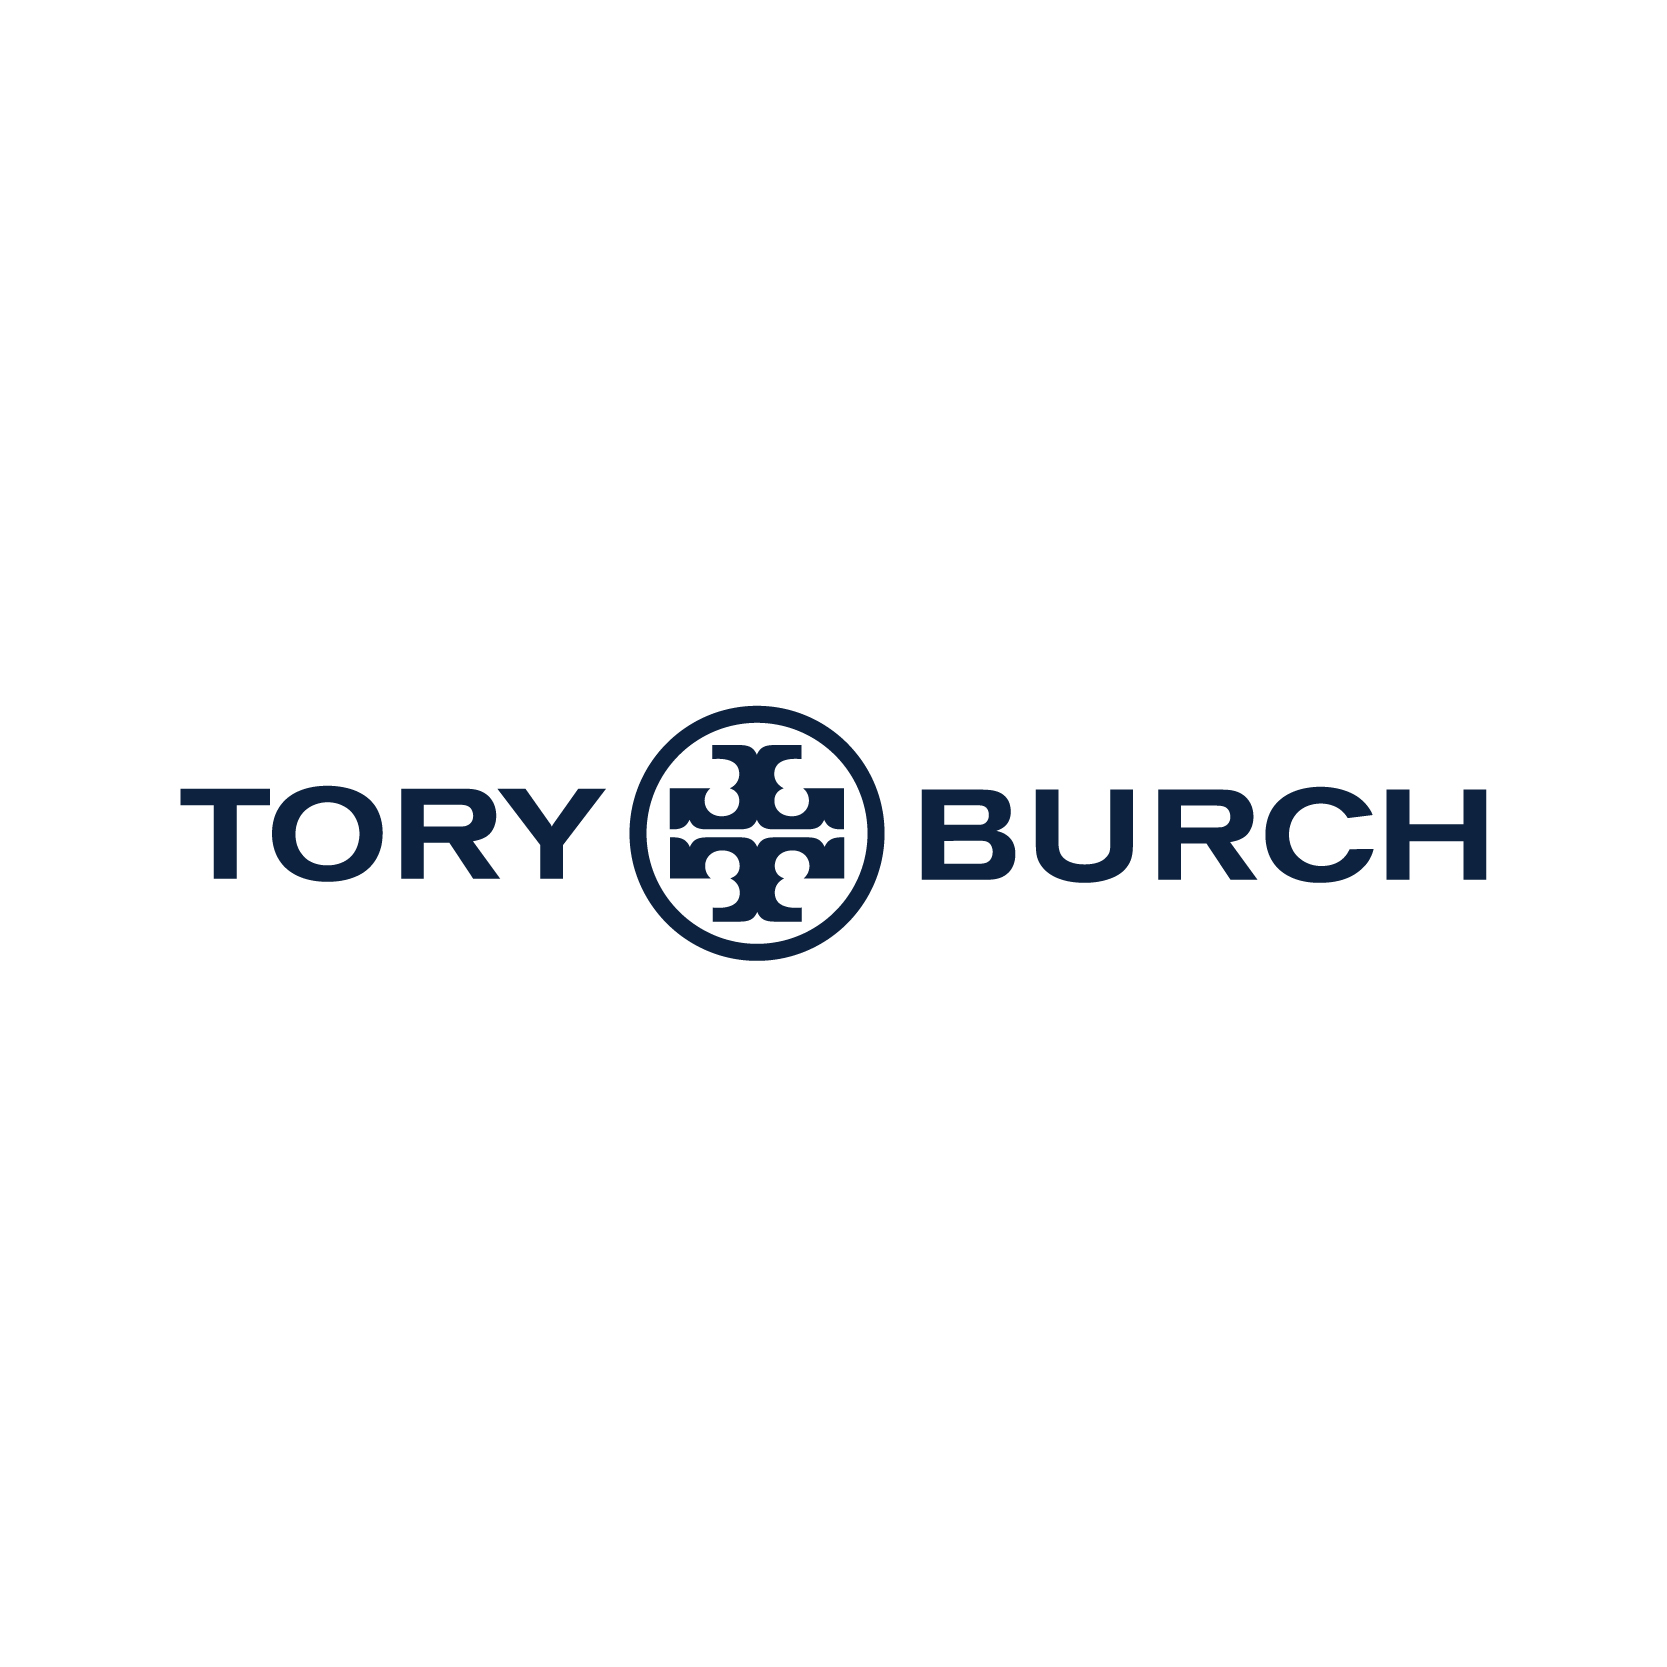 Tory Burch Coupons 